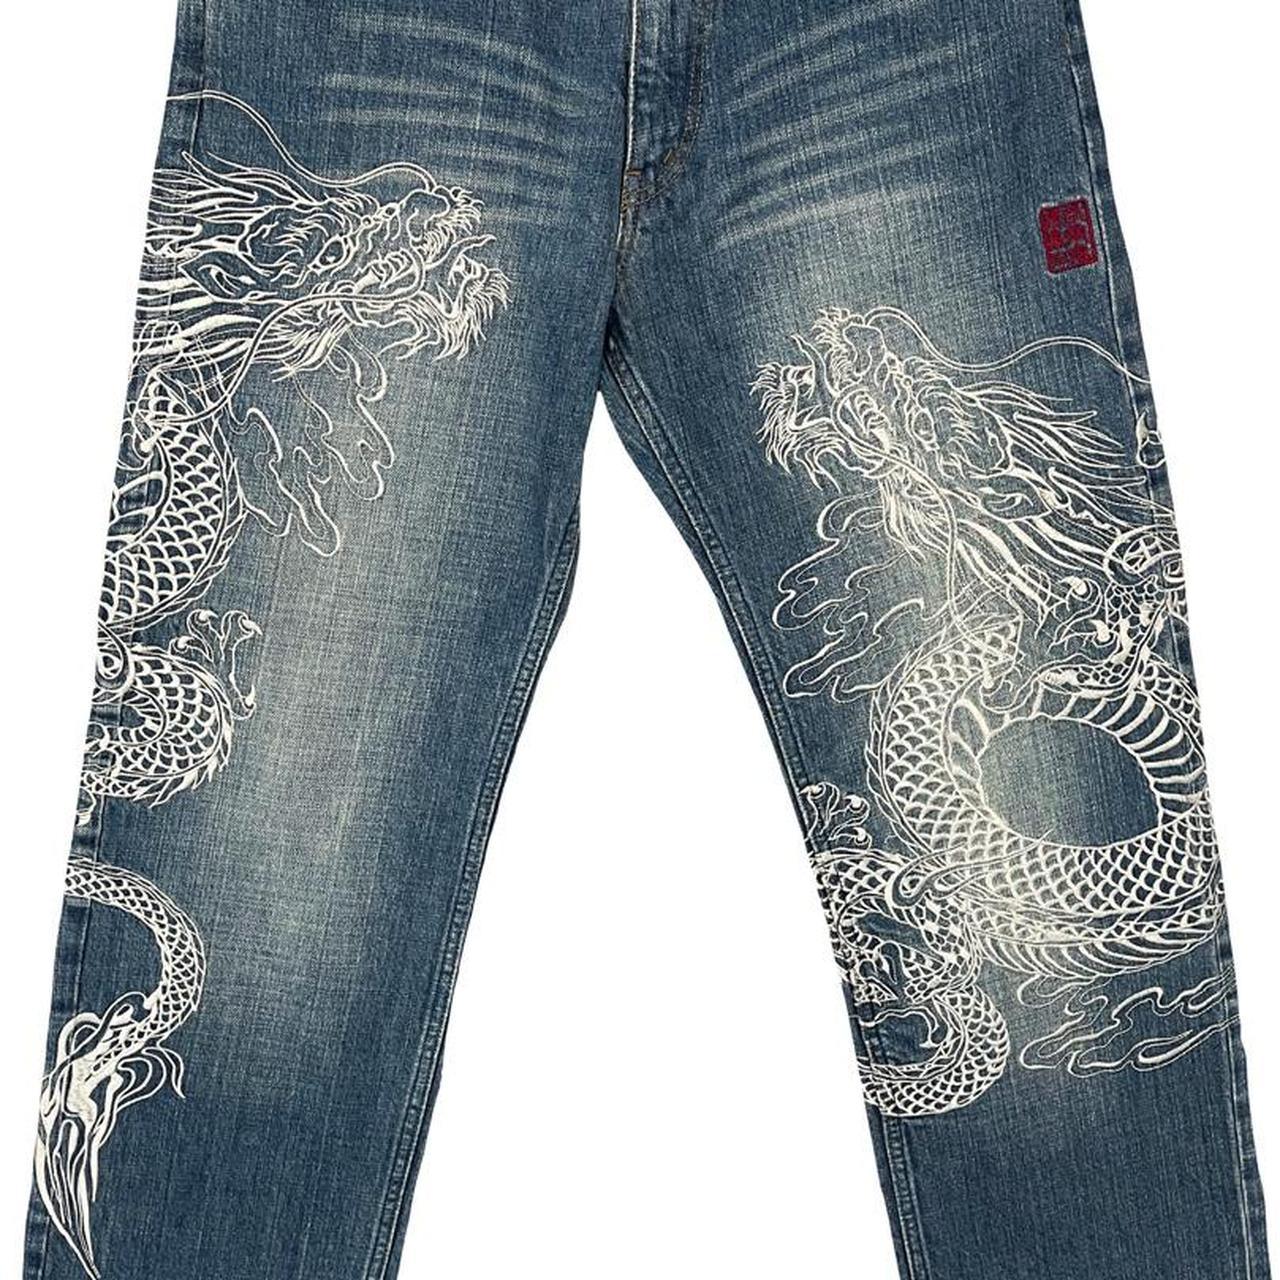 Karakuri Tamashii Dragon Jeans - Known Source